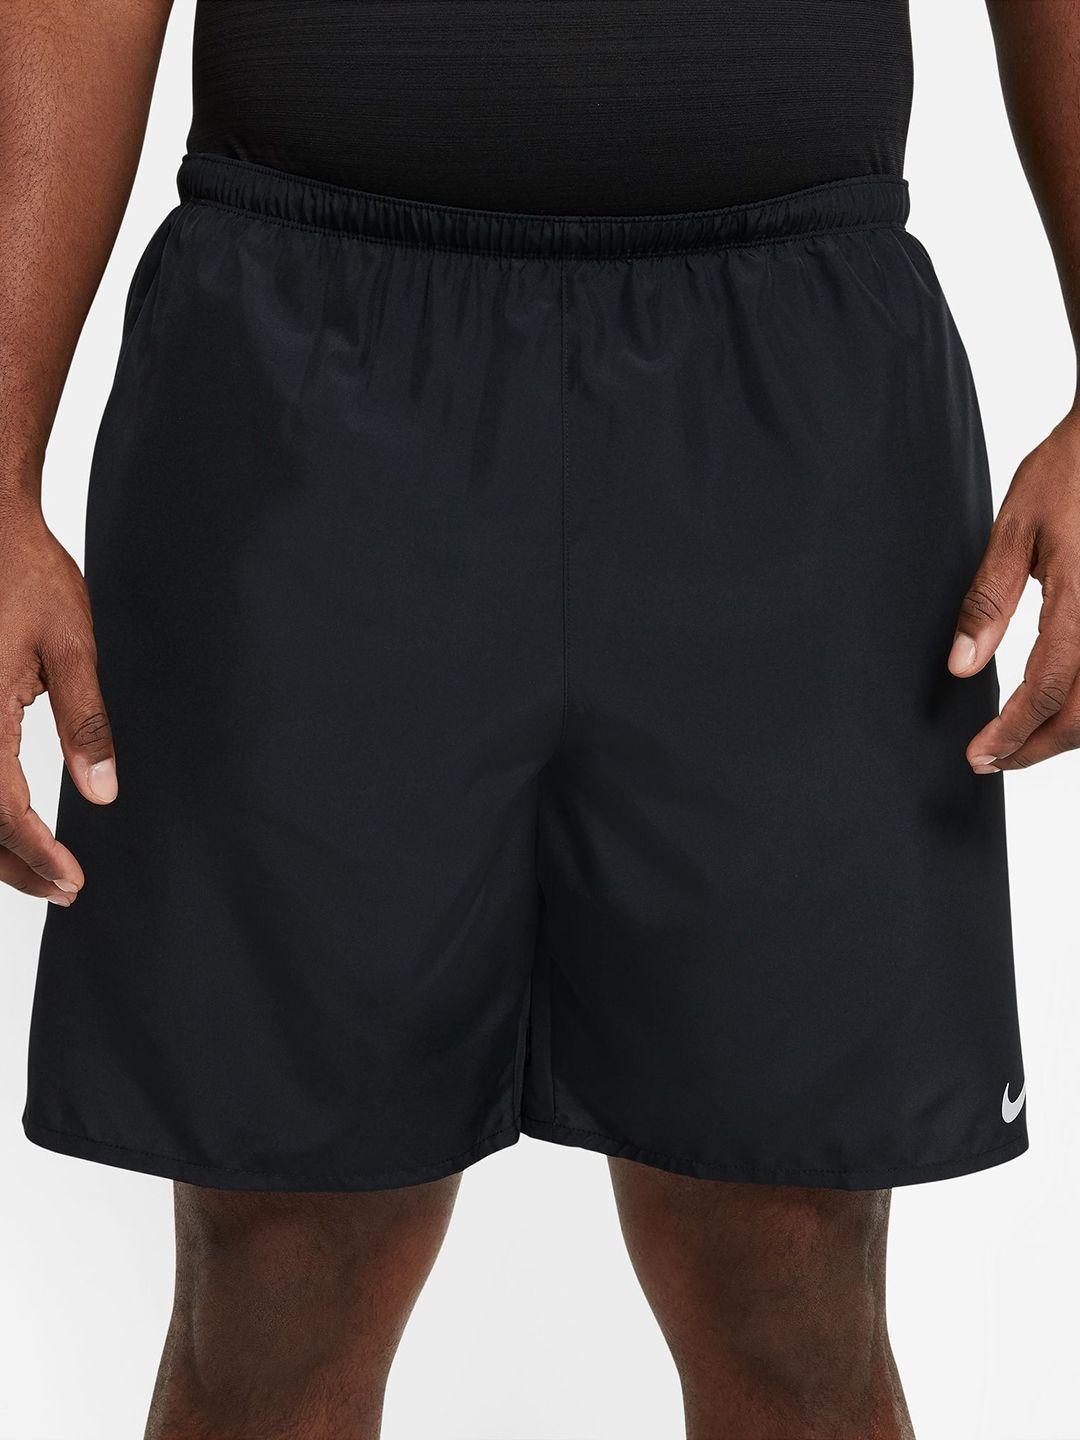 nike men challenger brief-lined running shorts